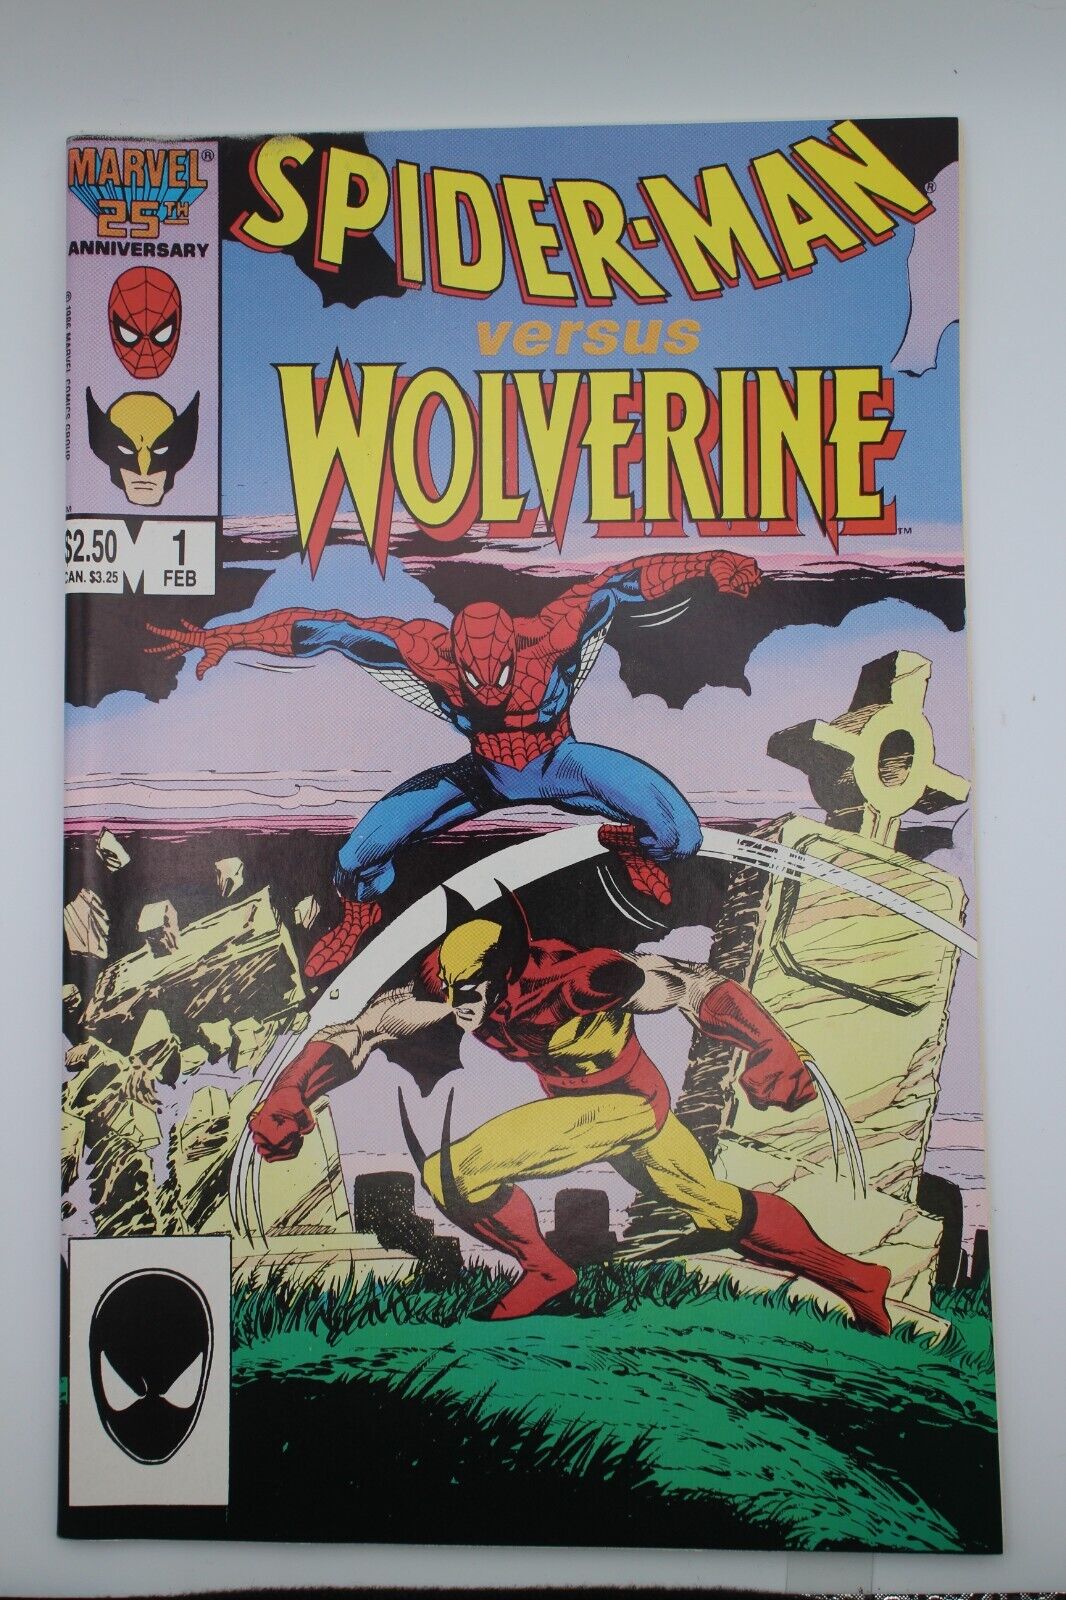 Spider-Man Vs. Wolverine #1 (Marvel Comics February 1987) EXCELLENT CONDITION